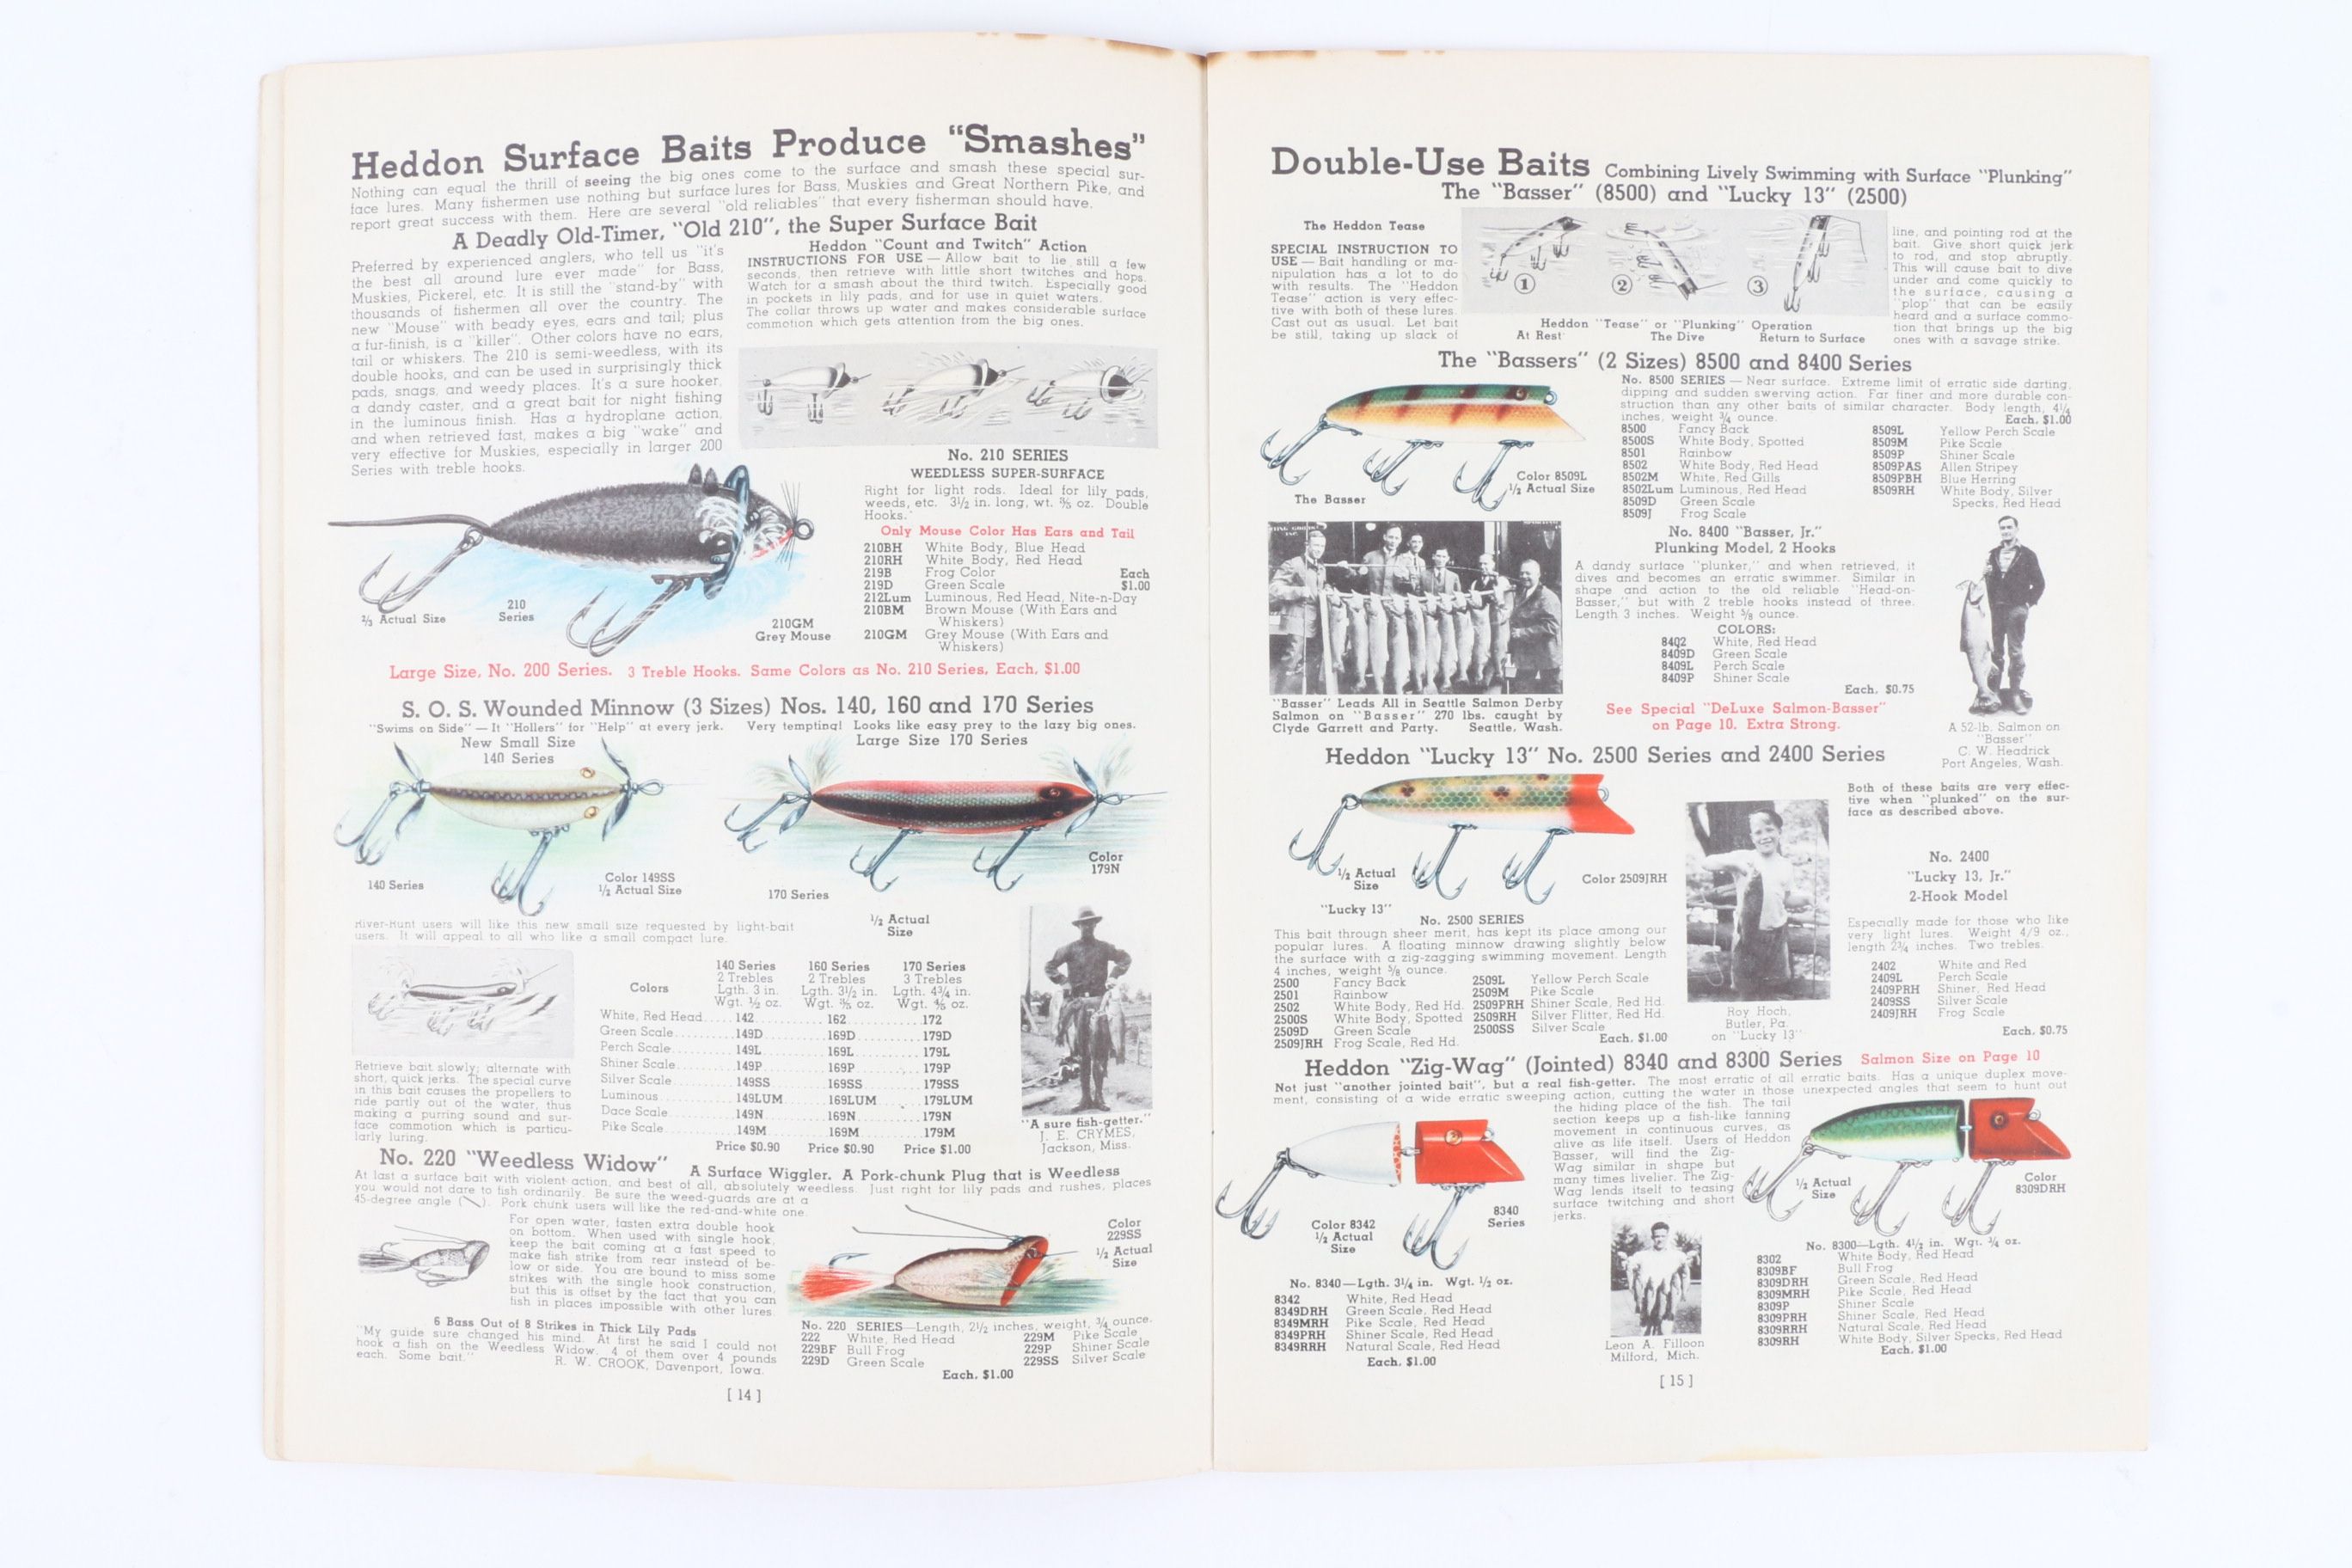 1938 Heddon Catalogue  Miller & Miller Auctions Ltd